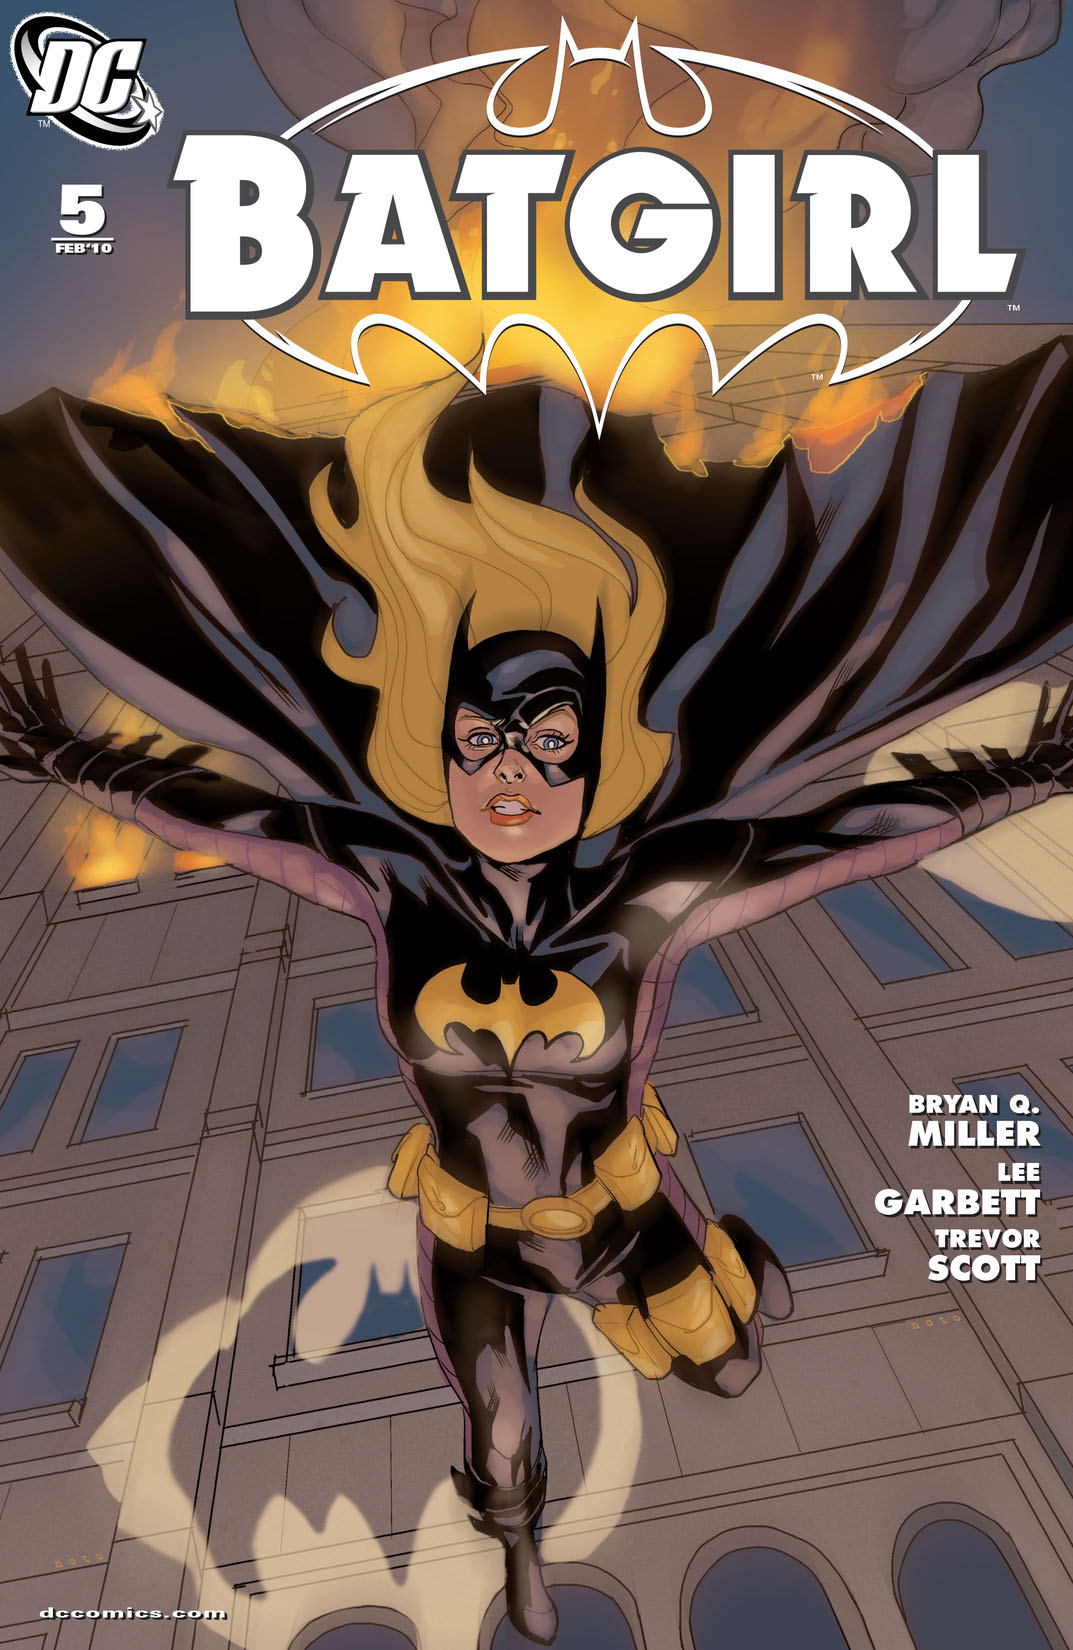 Batgirl (2009-) #5 preview images